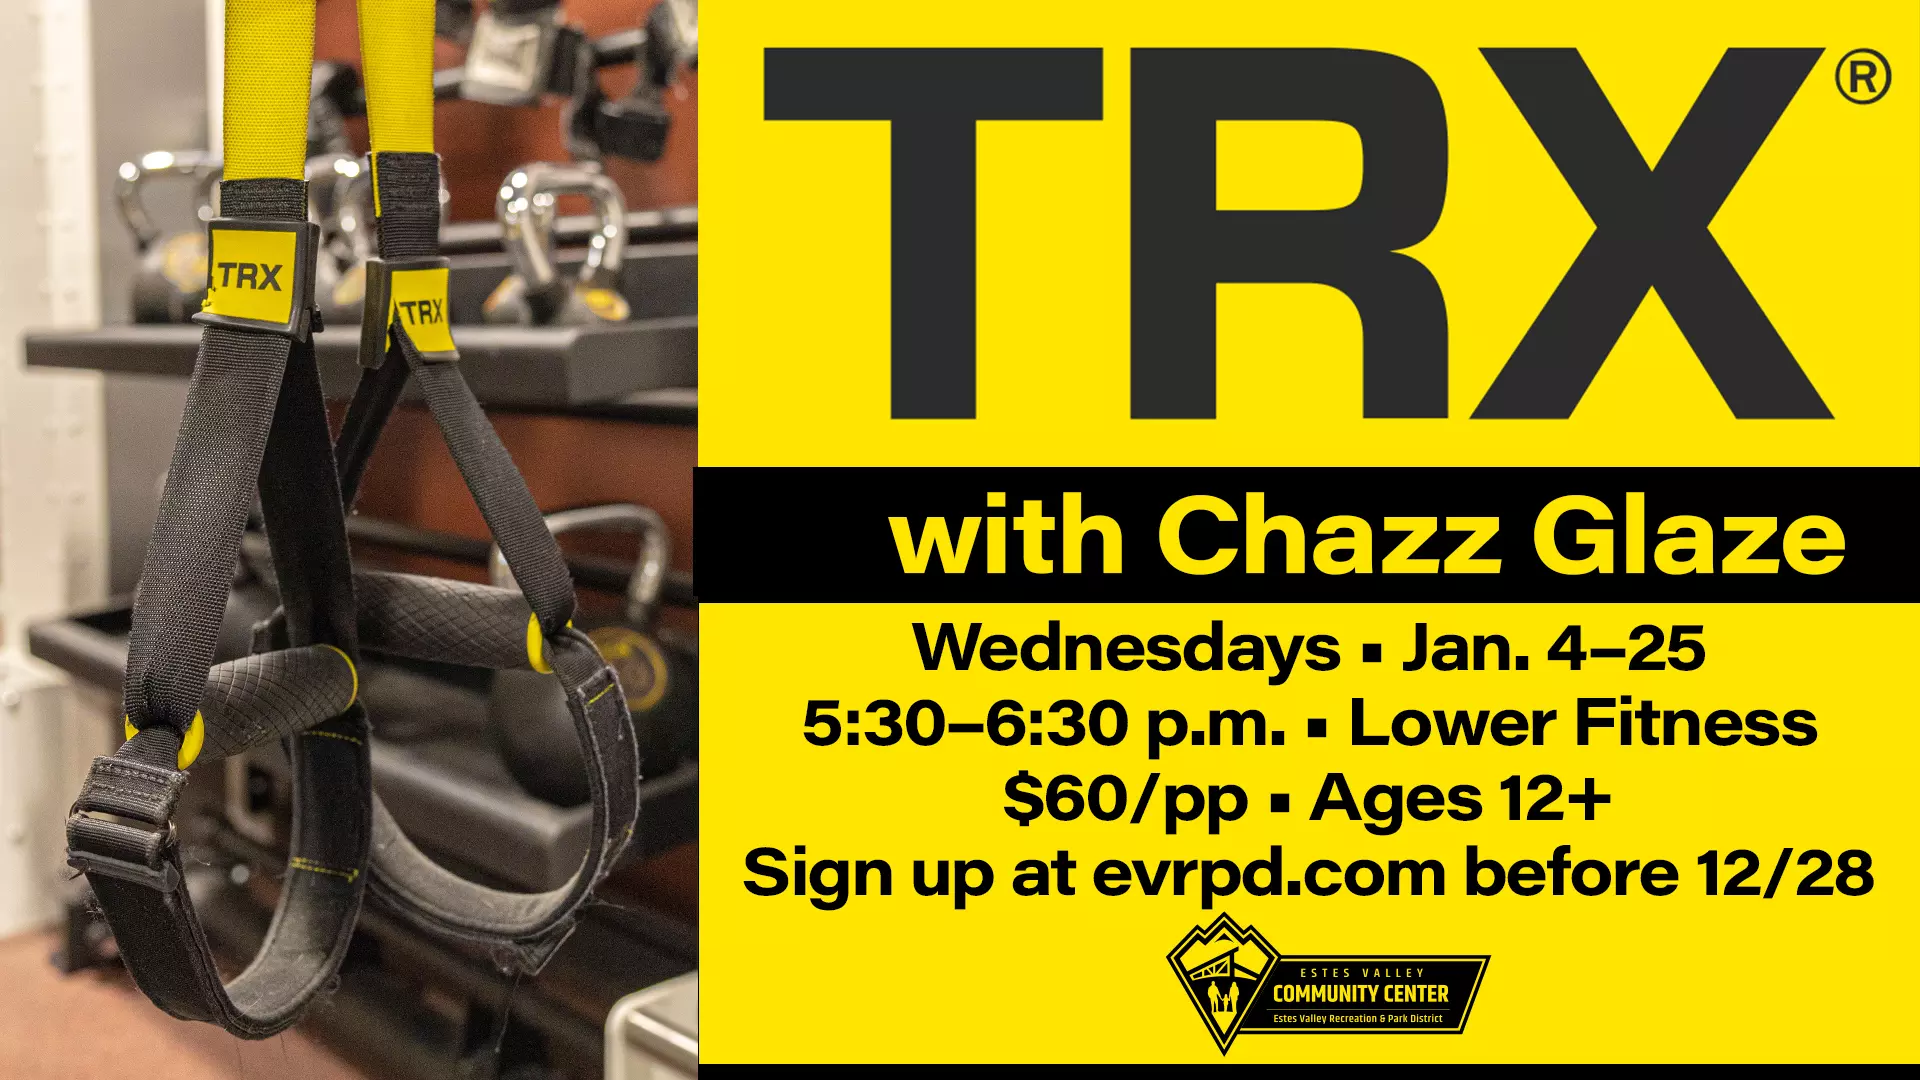 TRX suspension trainer class with Chazz Glaze